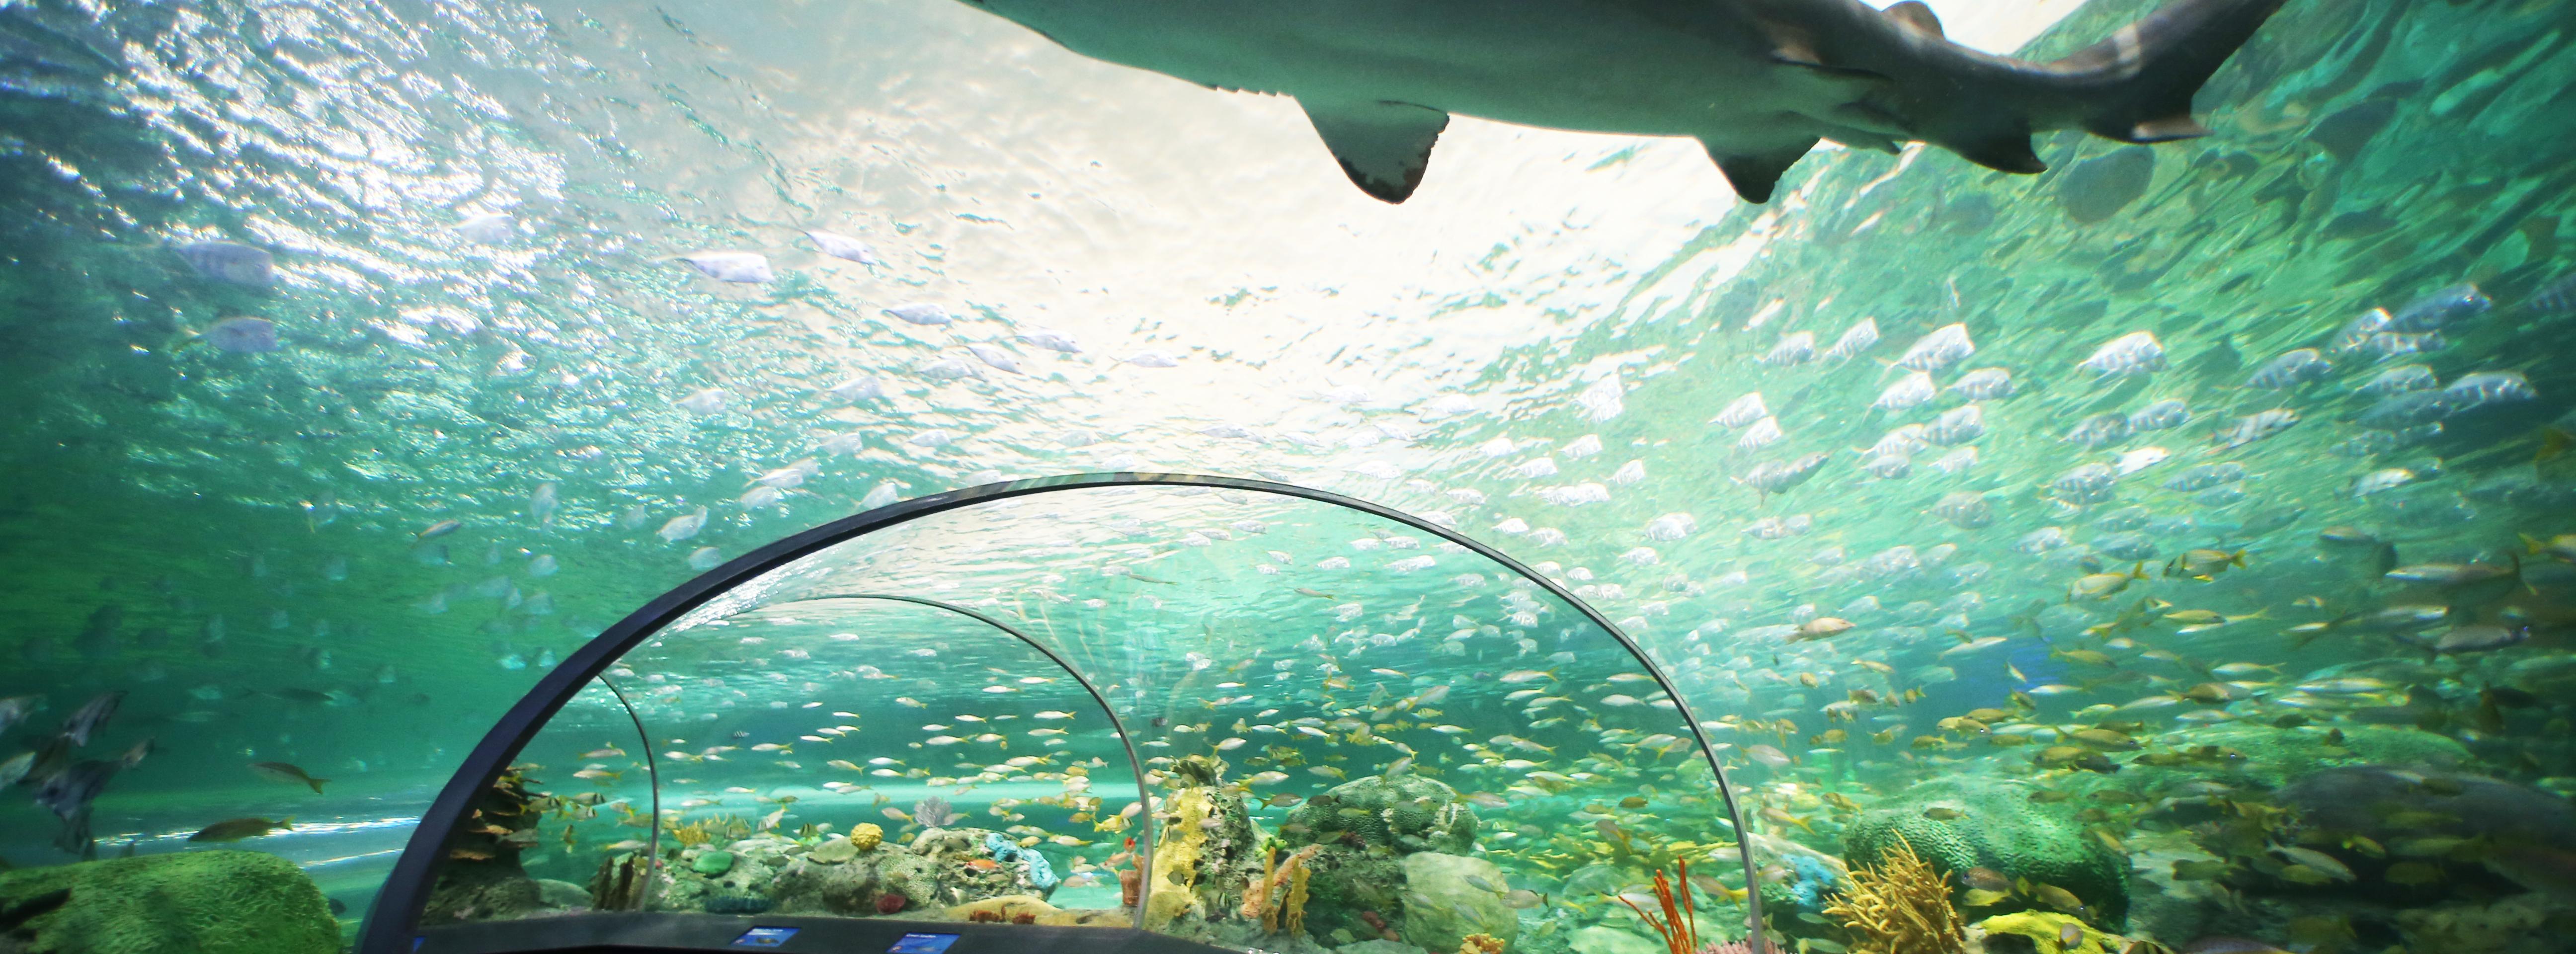 Billet coupe-file Ripley’s Aquarium of Canada - Toronto